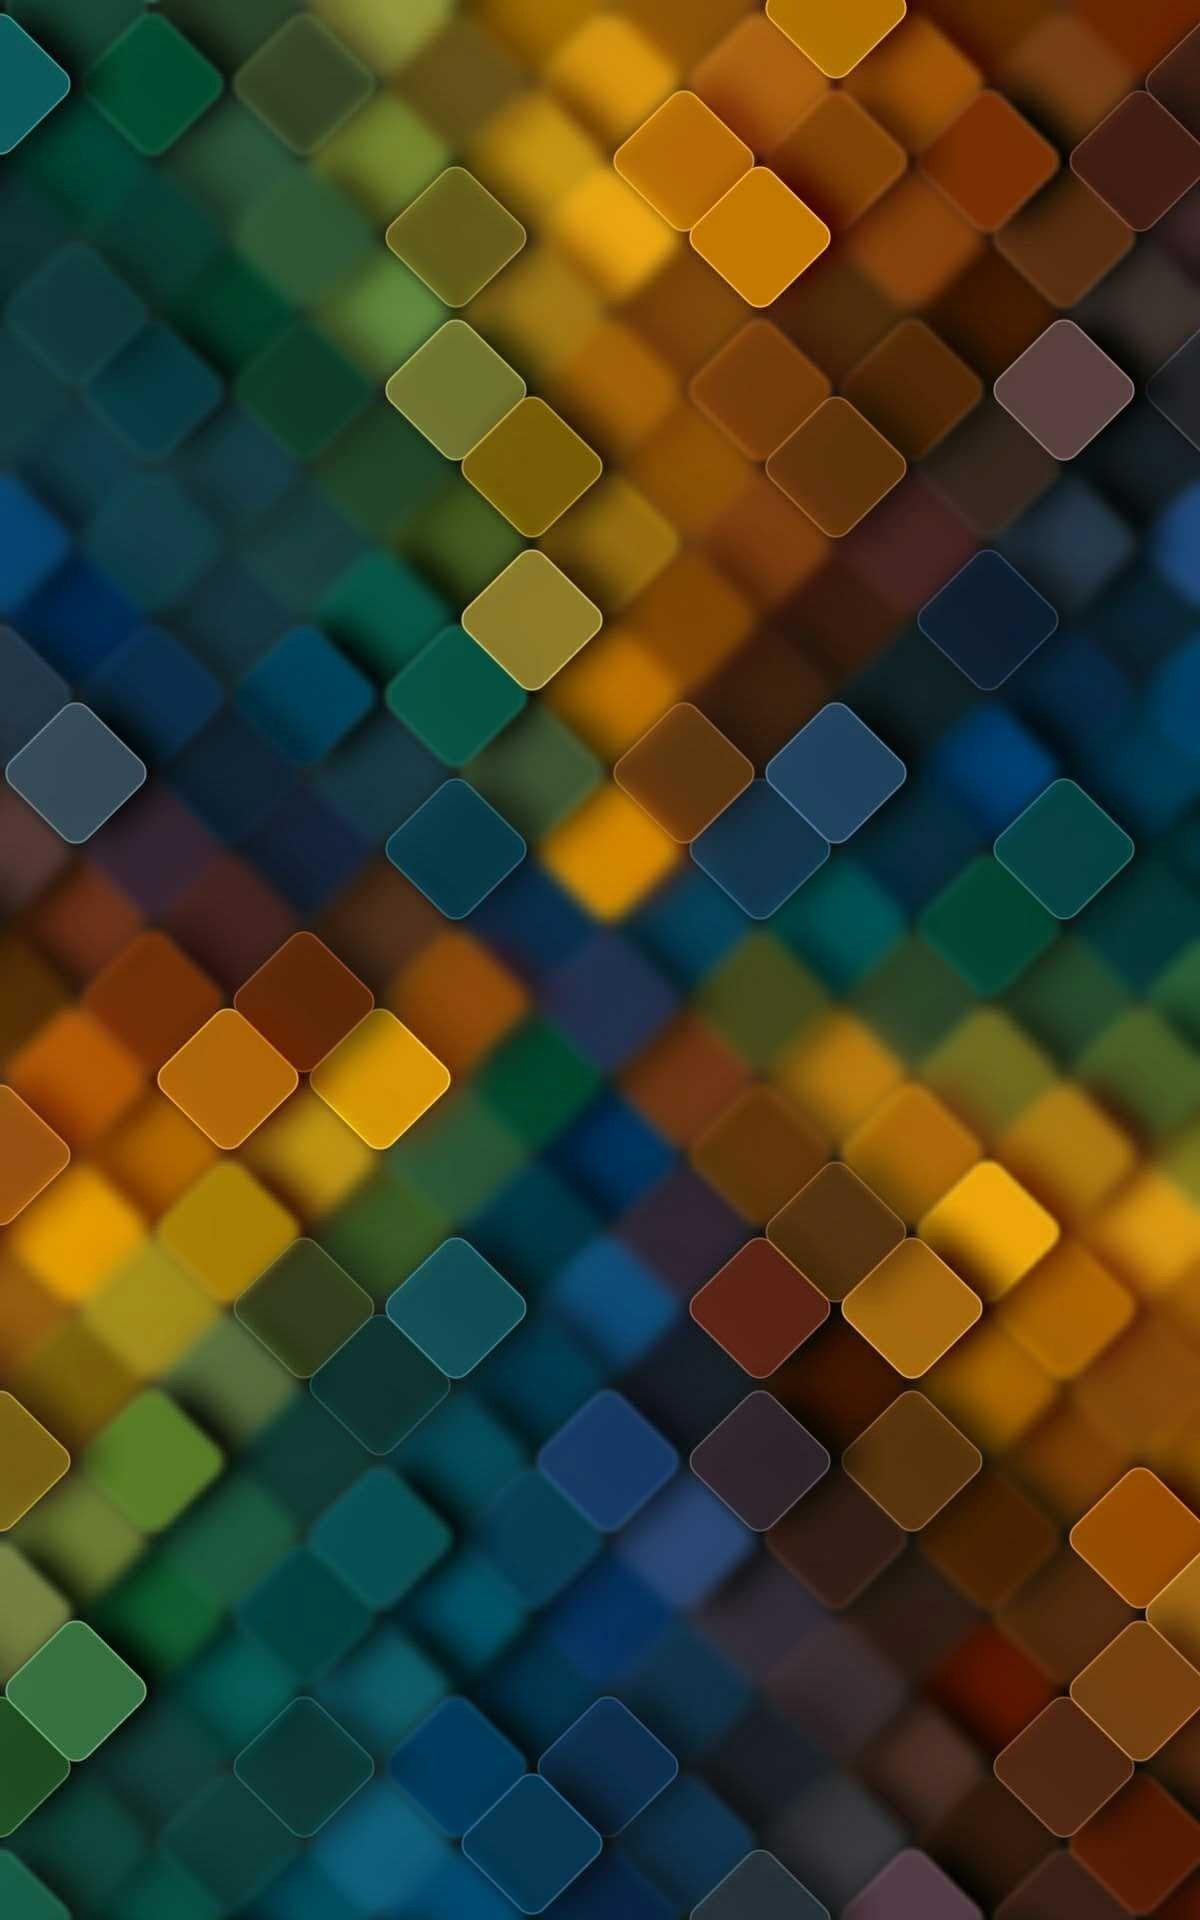 Color Scheme Block Wallpaper. Android wallpaper, Cellphone wallpaper, iPhone background wallpaper